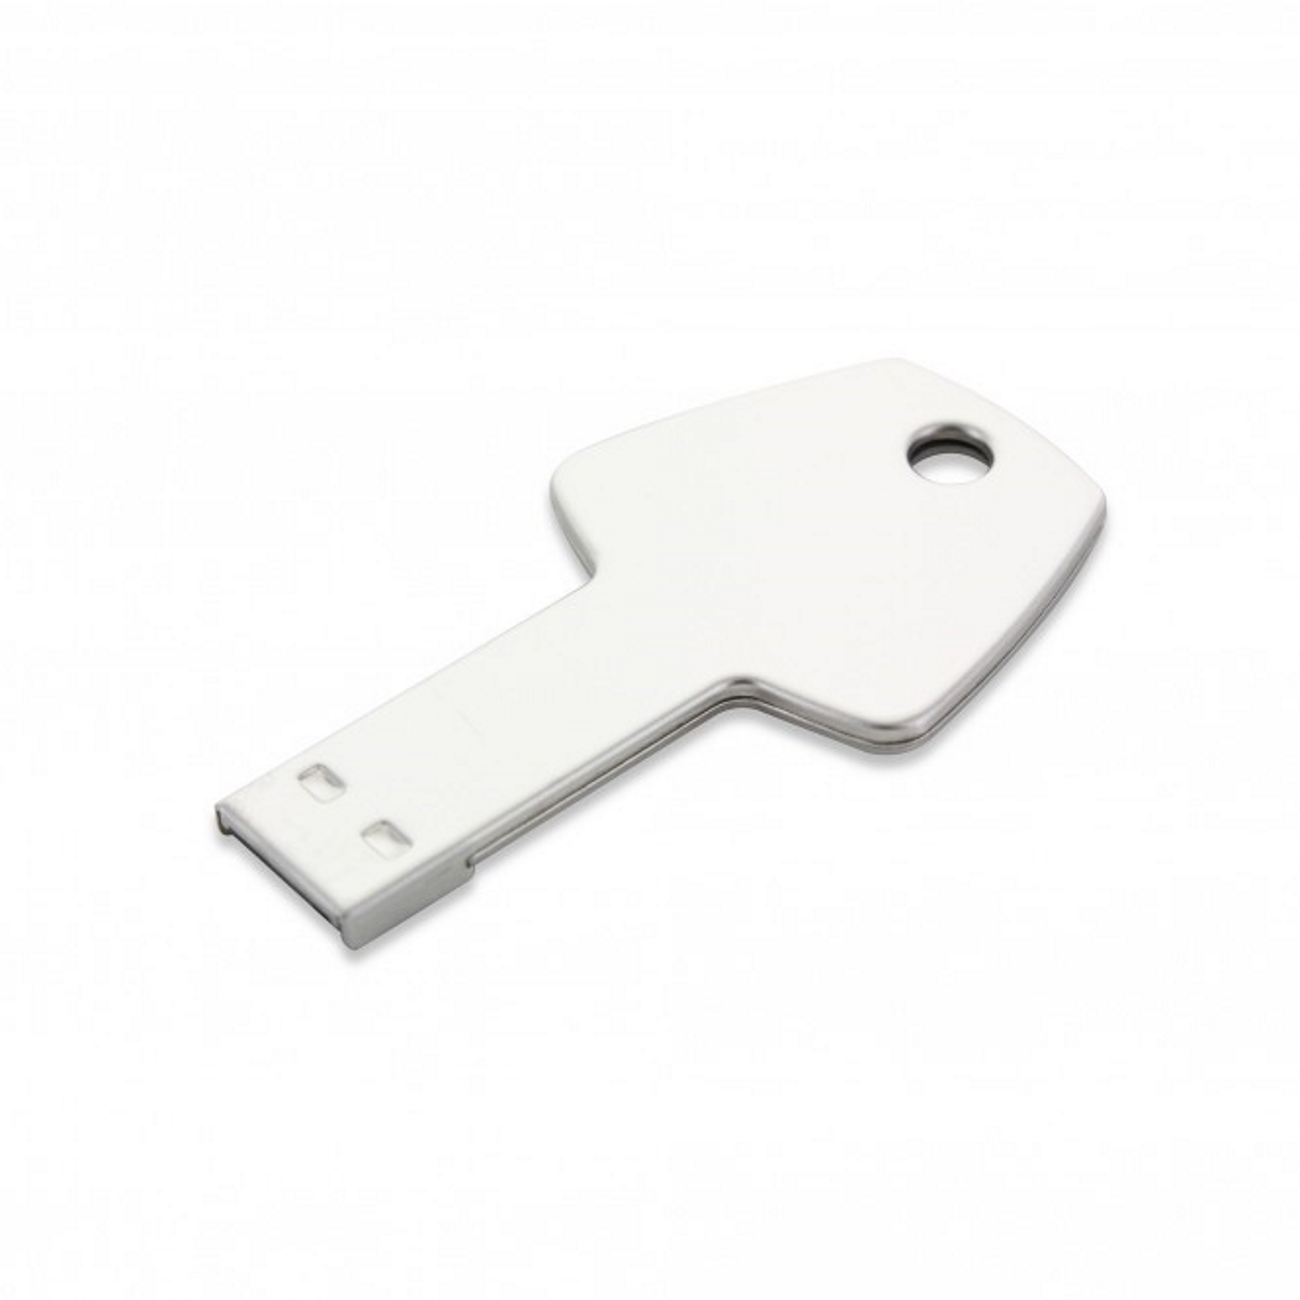 USB GERMANY (Silber, ®Schlüssel USB-Stick GB) 4 Key